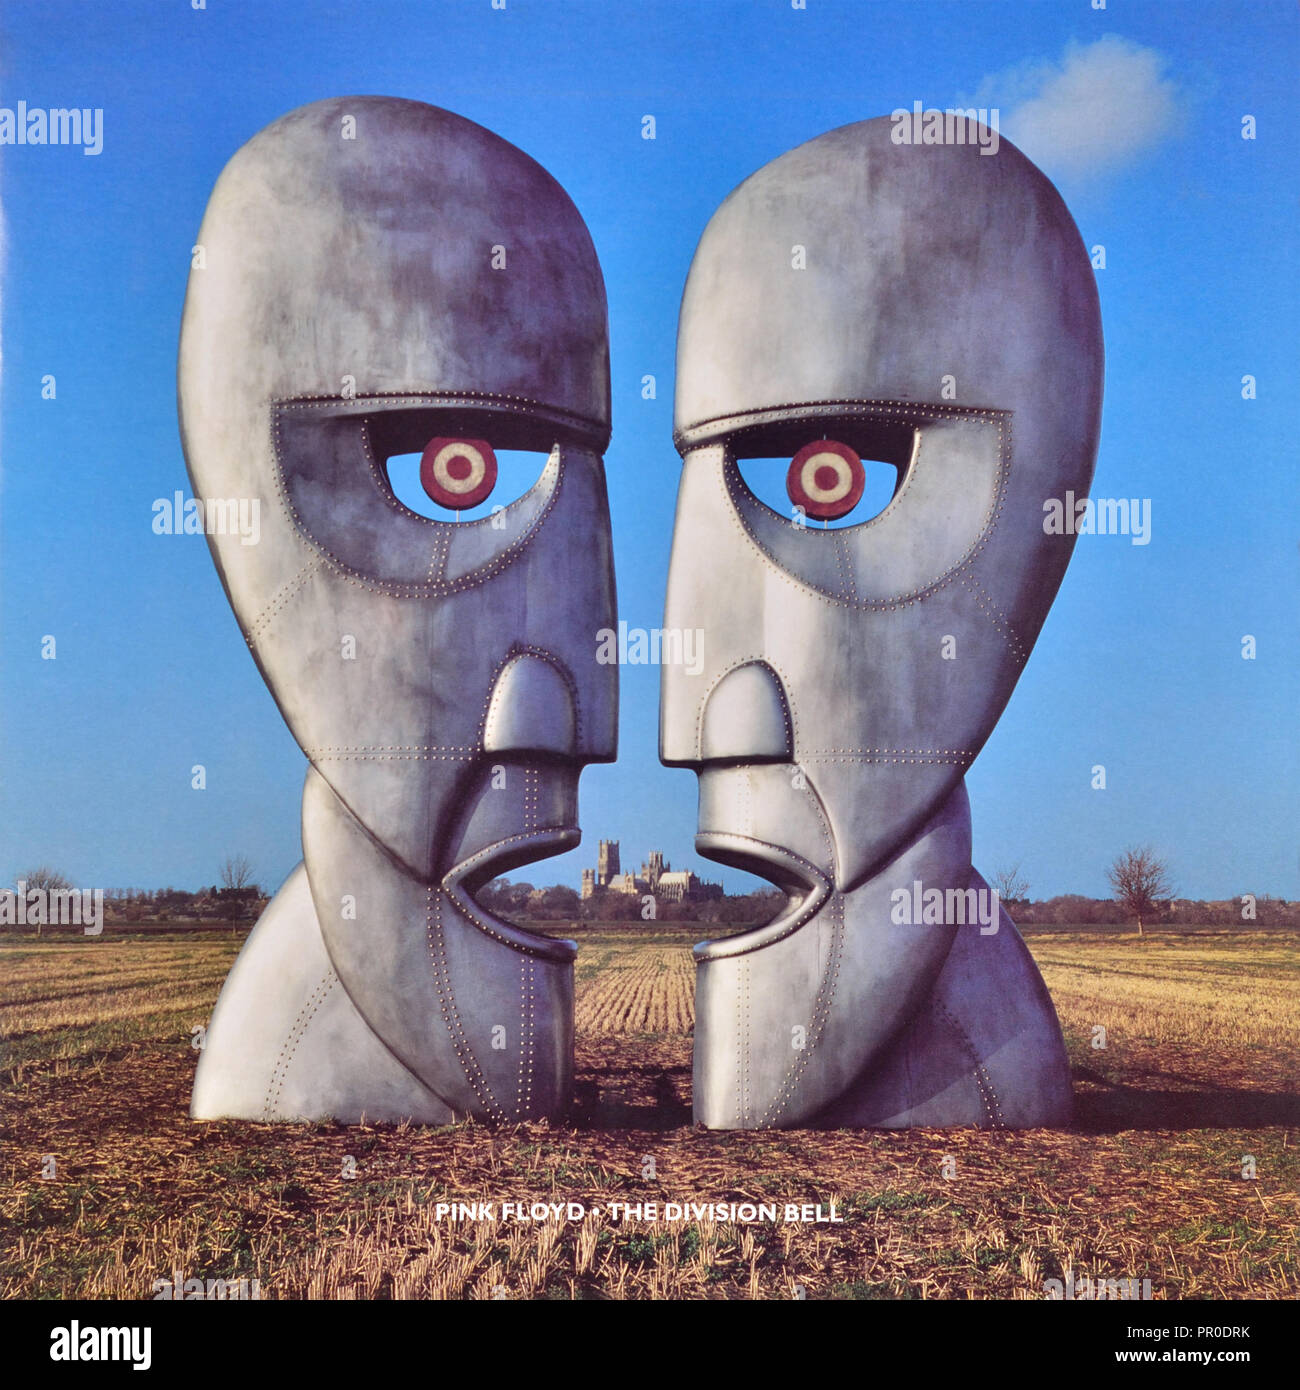 Pink Floyd - original Vinyl Album Cover - The Division Bell - 1994 Stockfoto